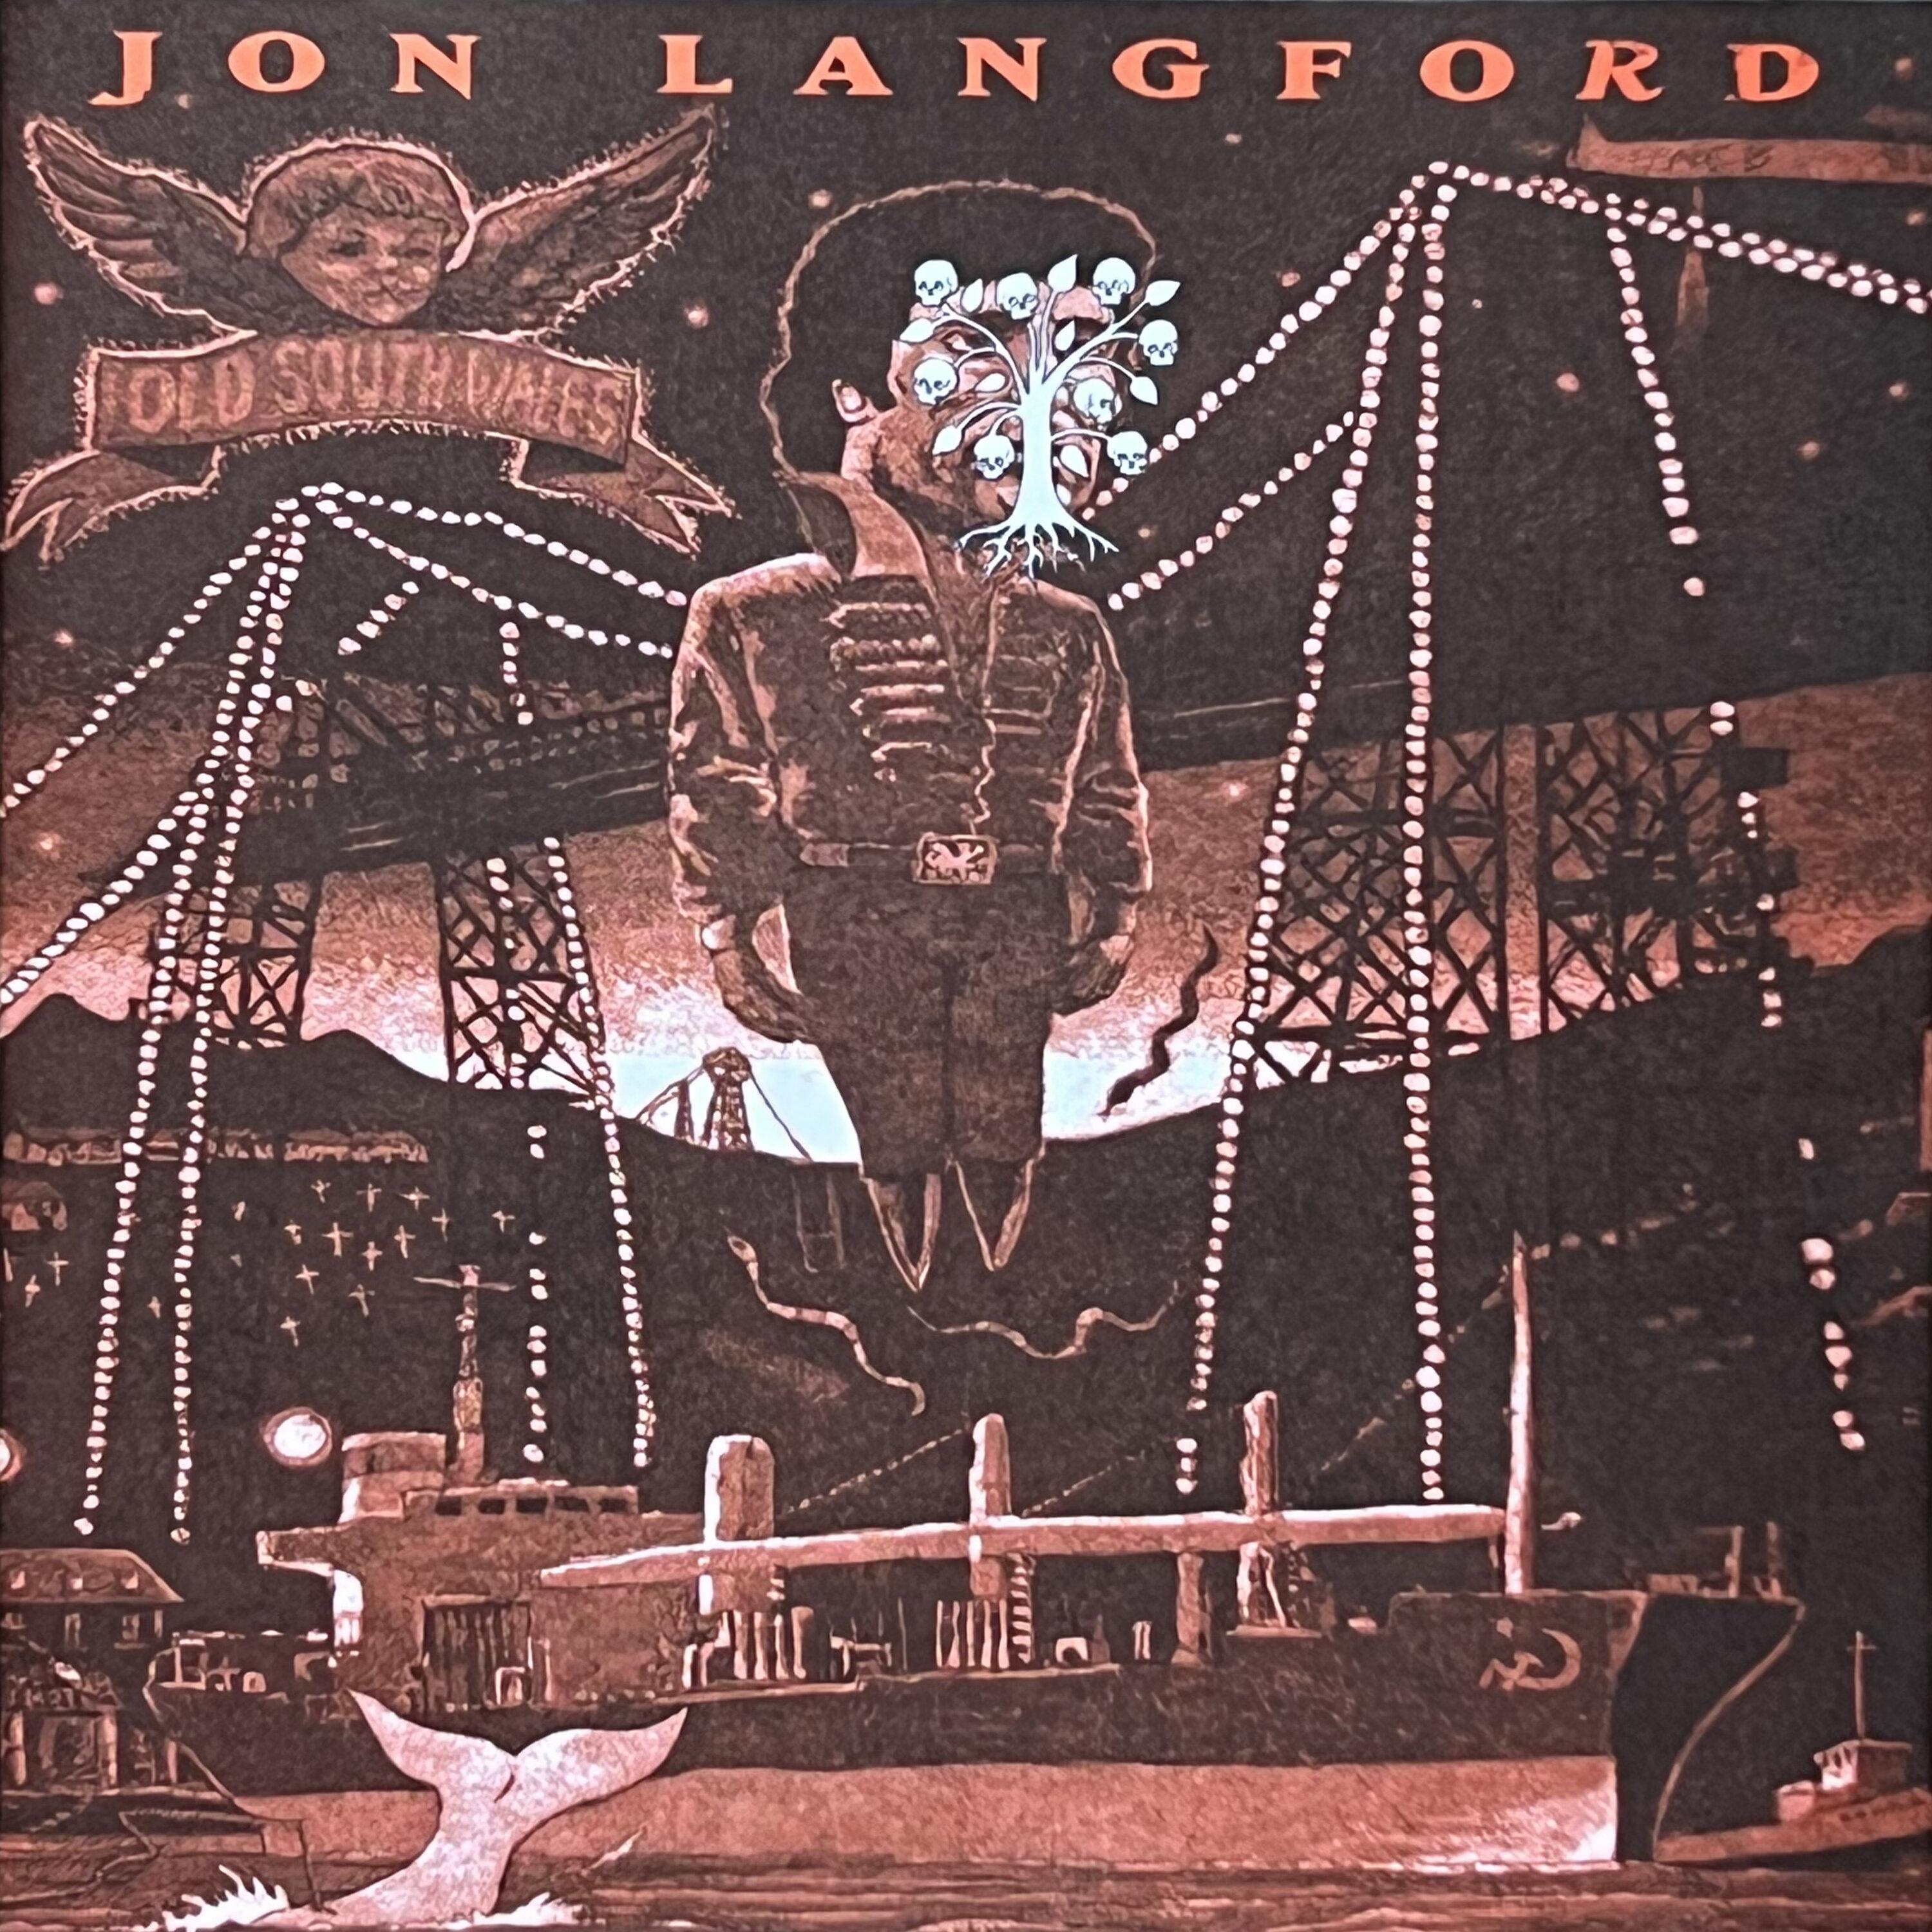 Jon Langford - Inside The Whale